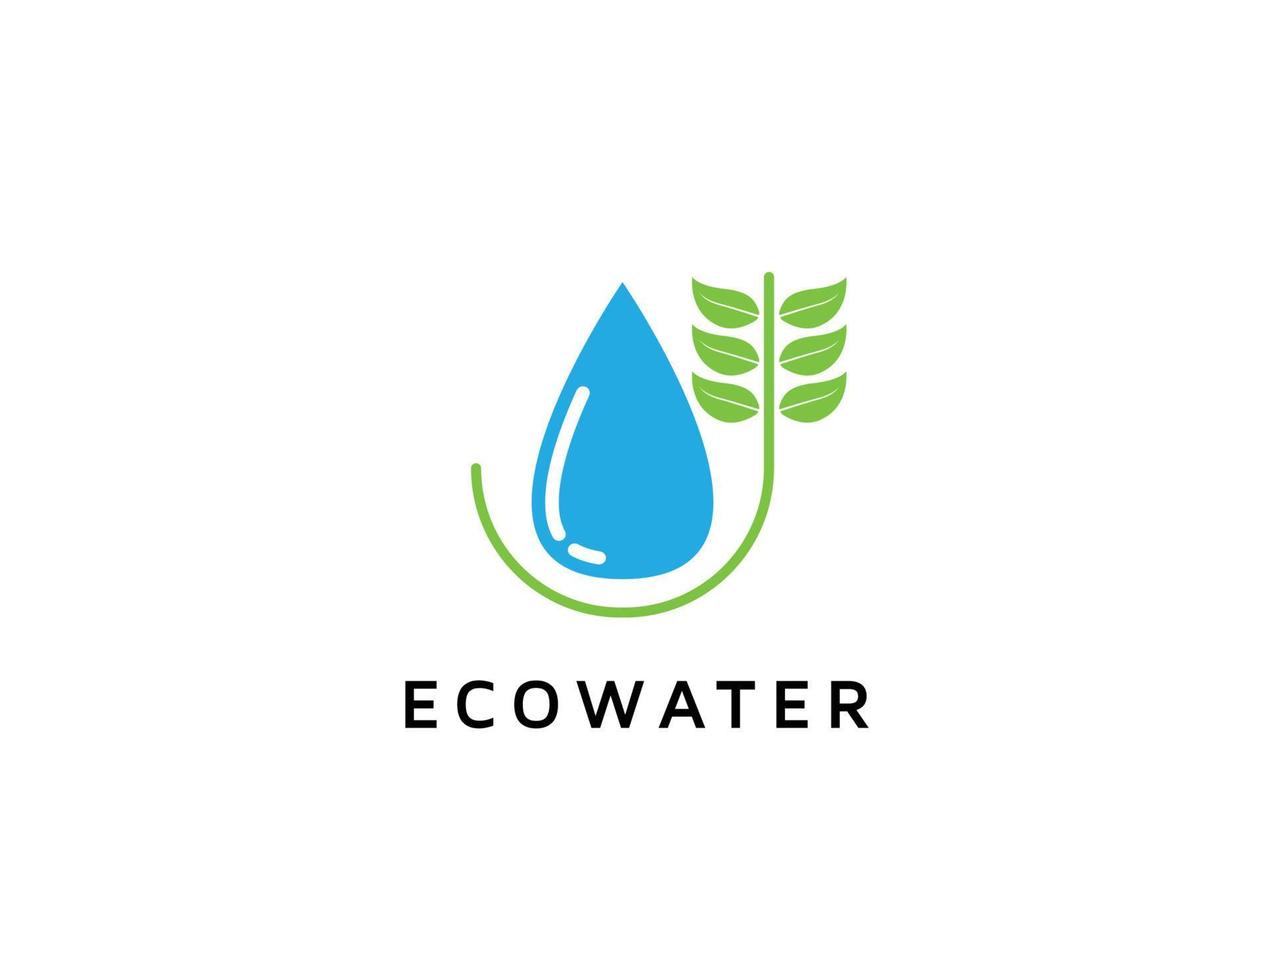 Eco water logo with leaf design illustration vector